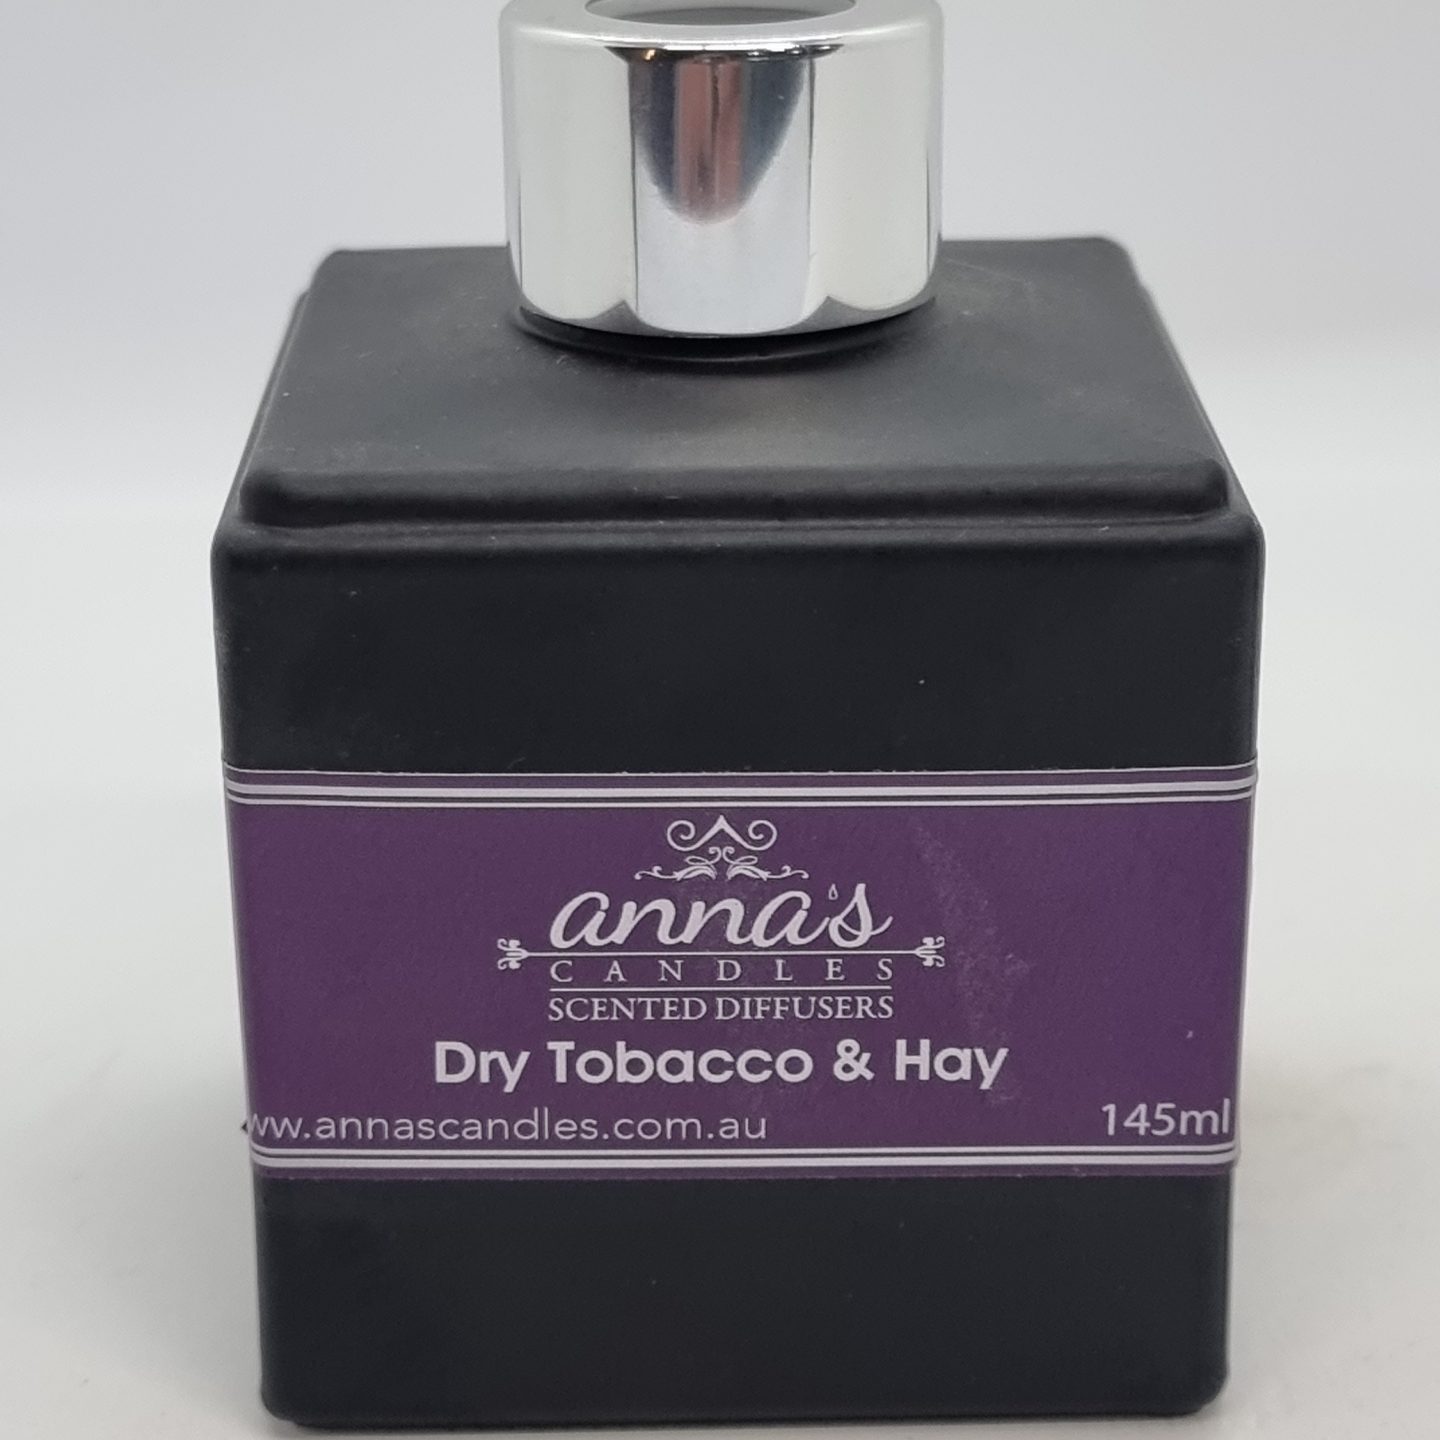 Dry Tobacco & Hay 145ml Diffuser